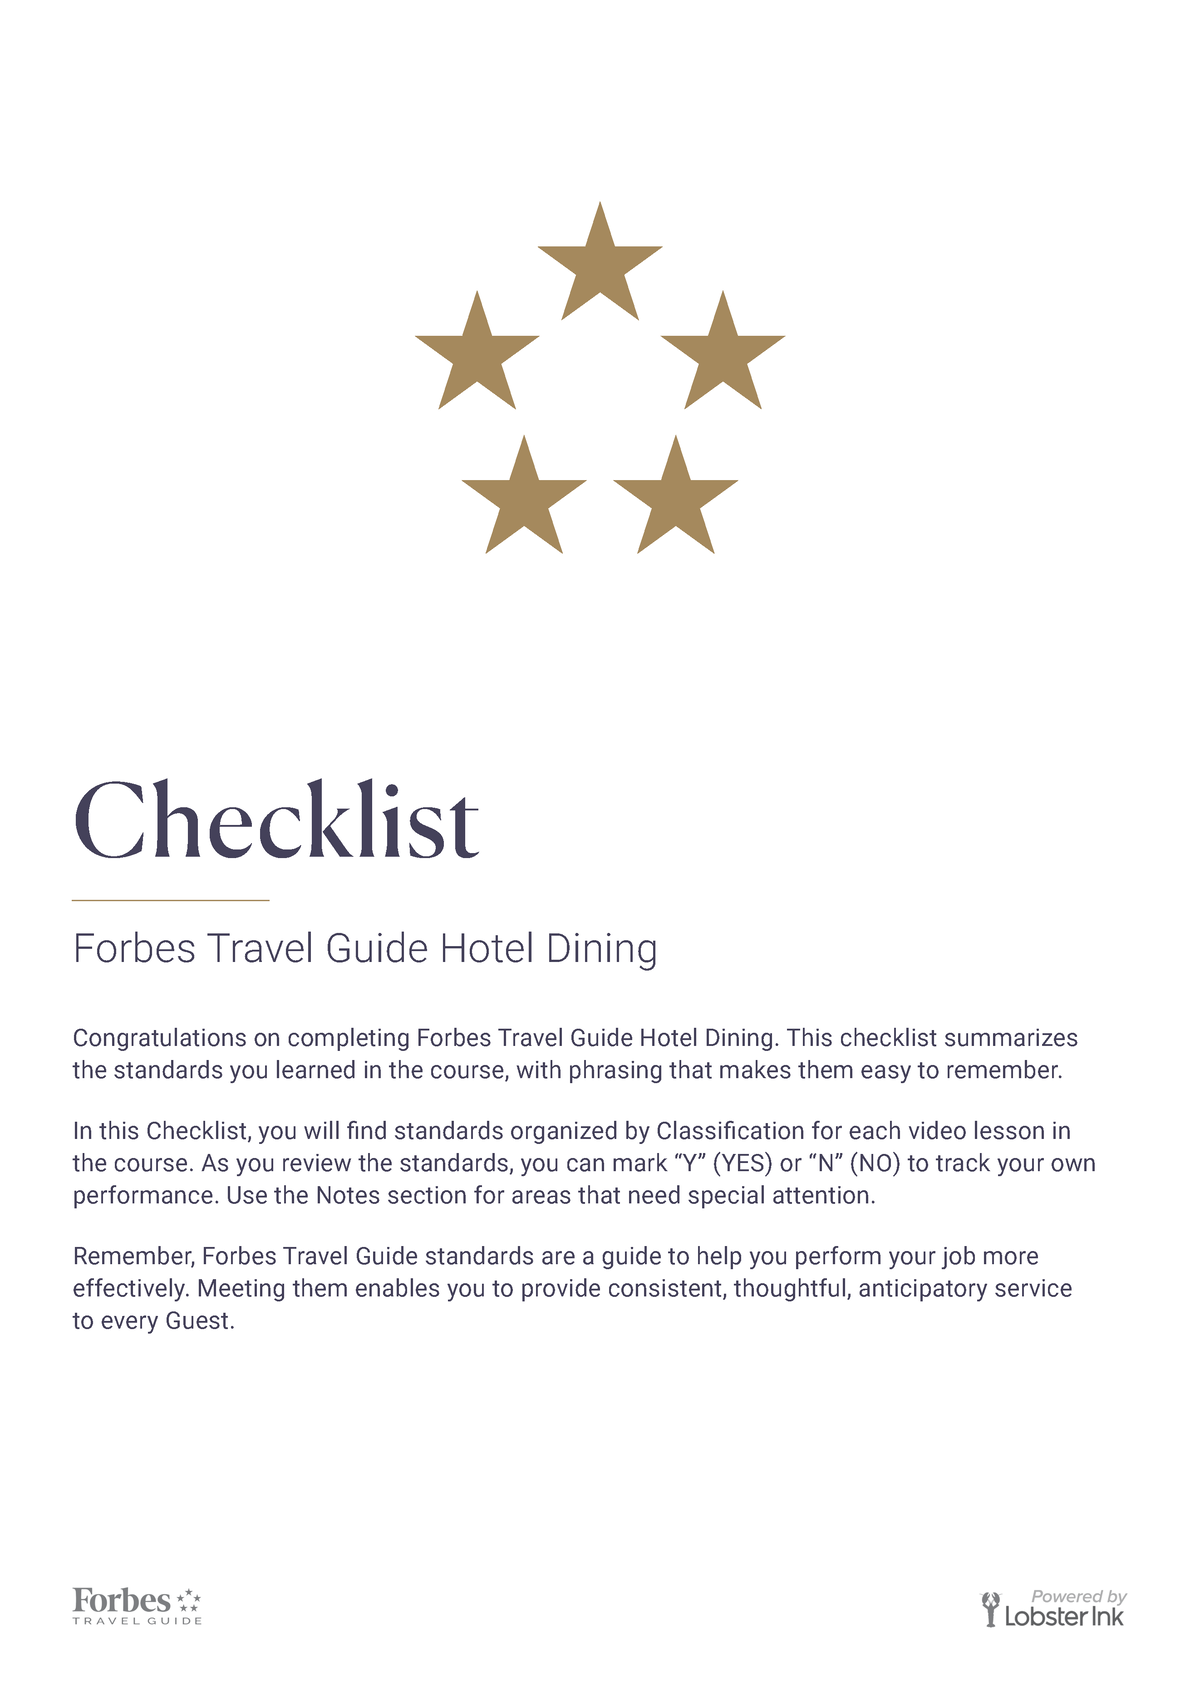 9 ftg hotel dining standards checklist Checklist Forbes Travel Guide